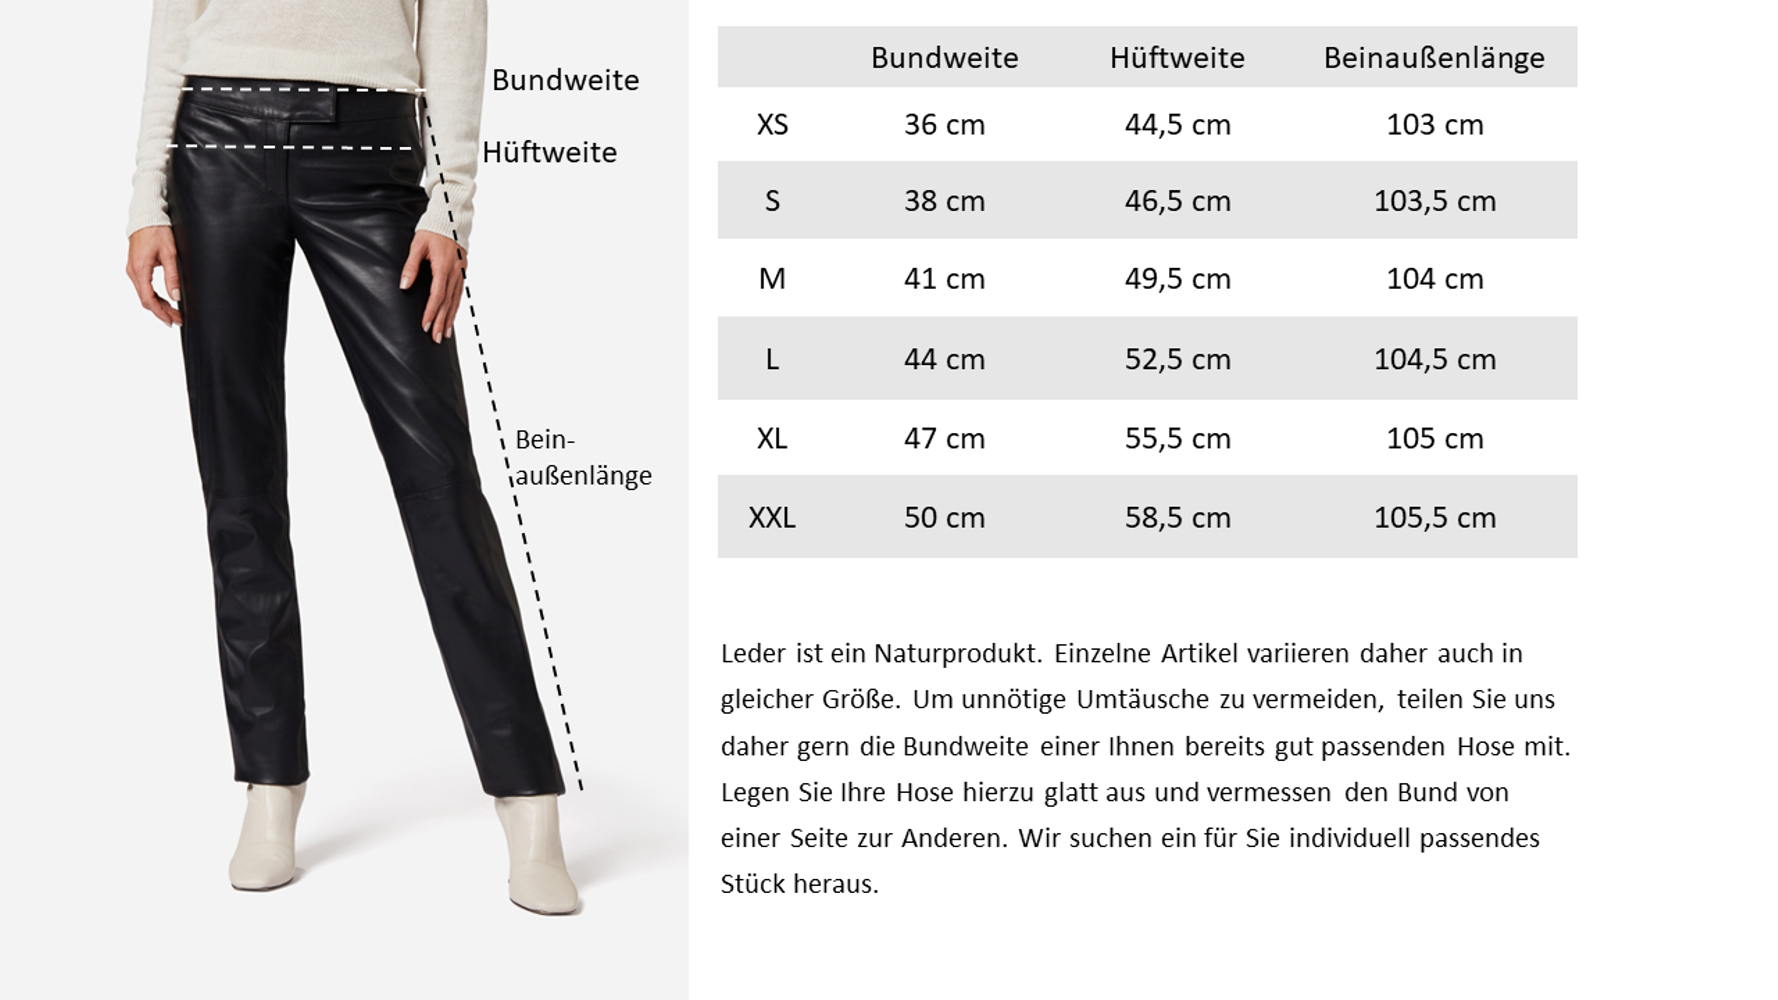 Ladies leather pants low cut, black in 2 colors, Bild 7